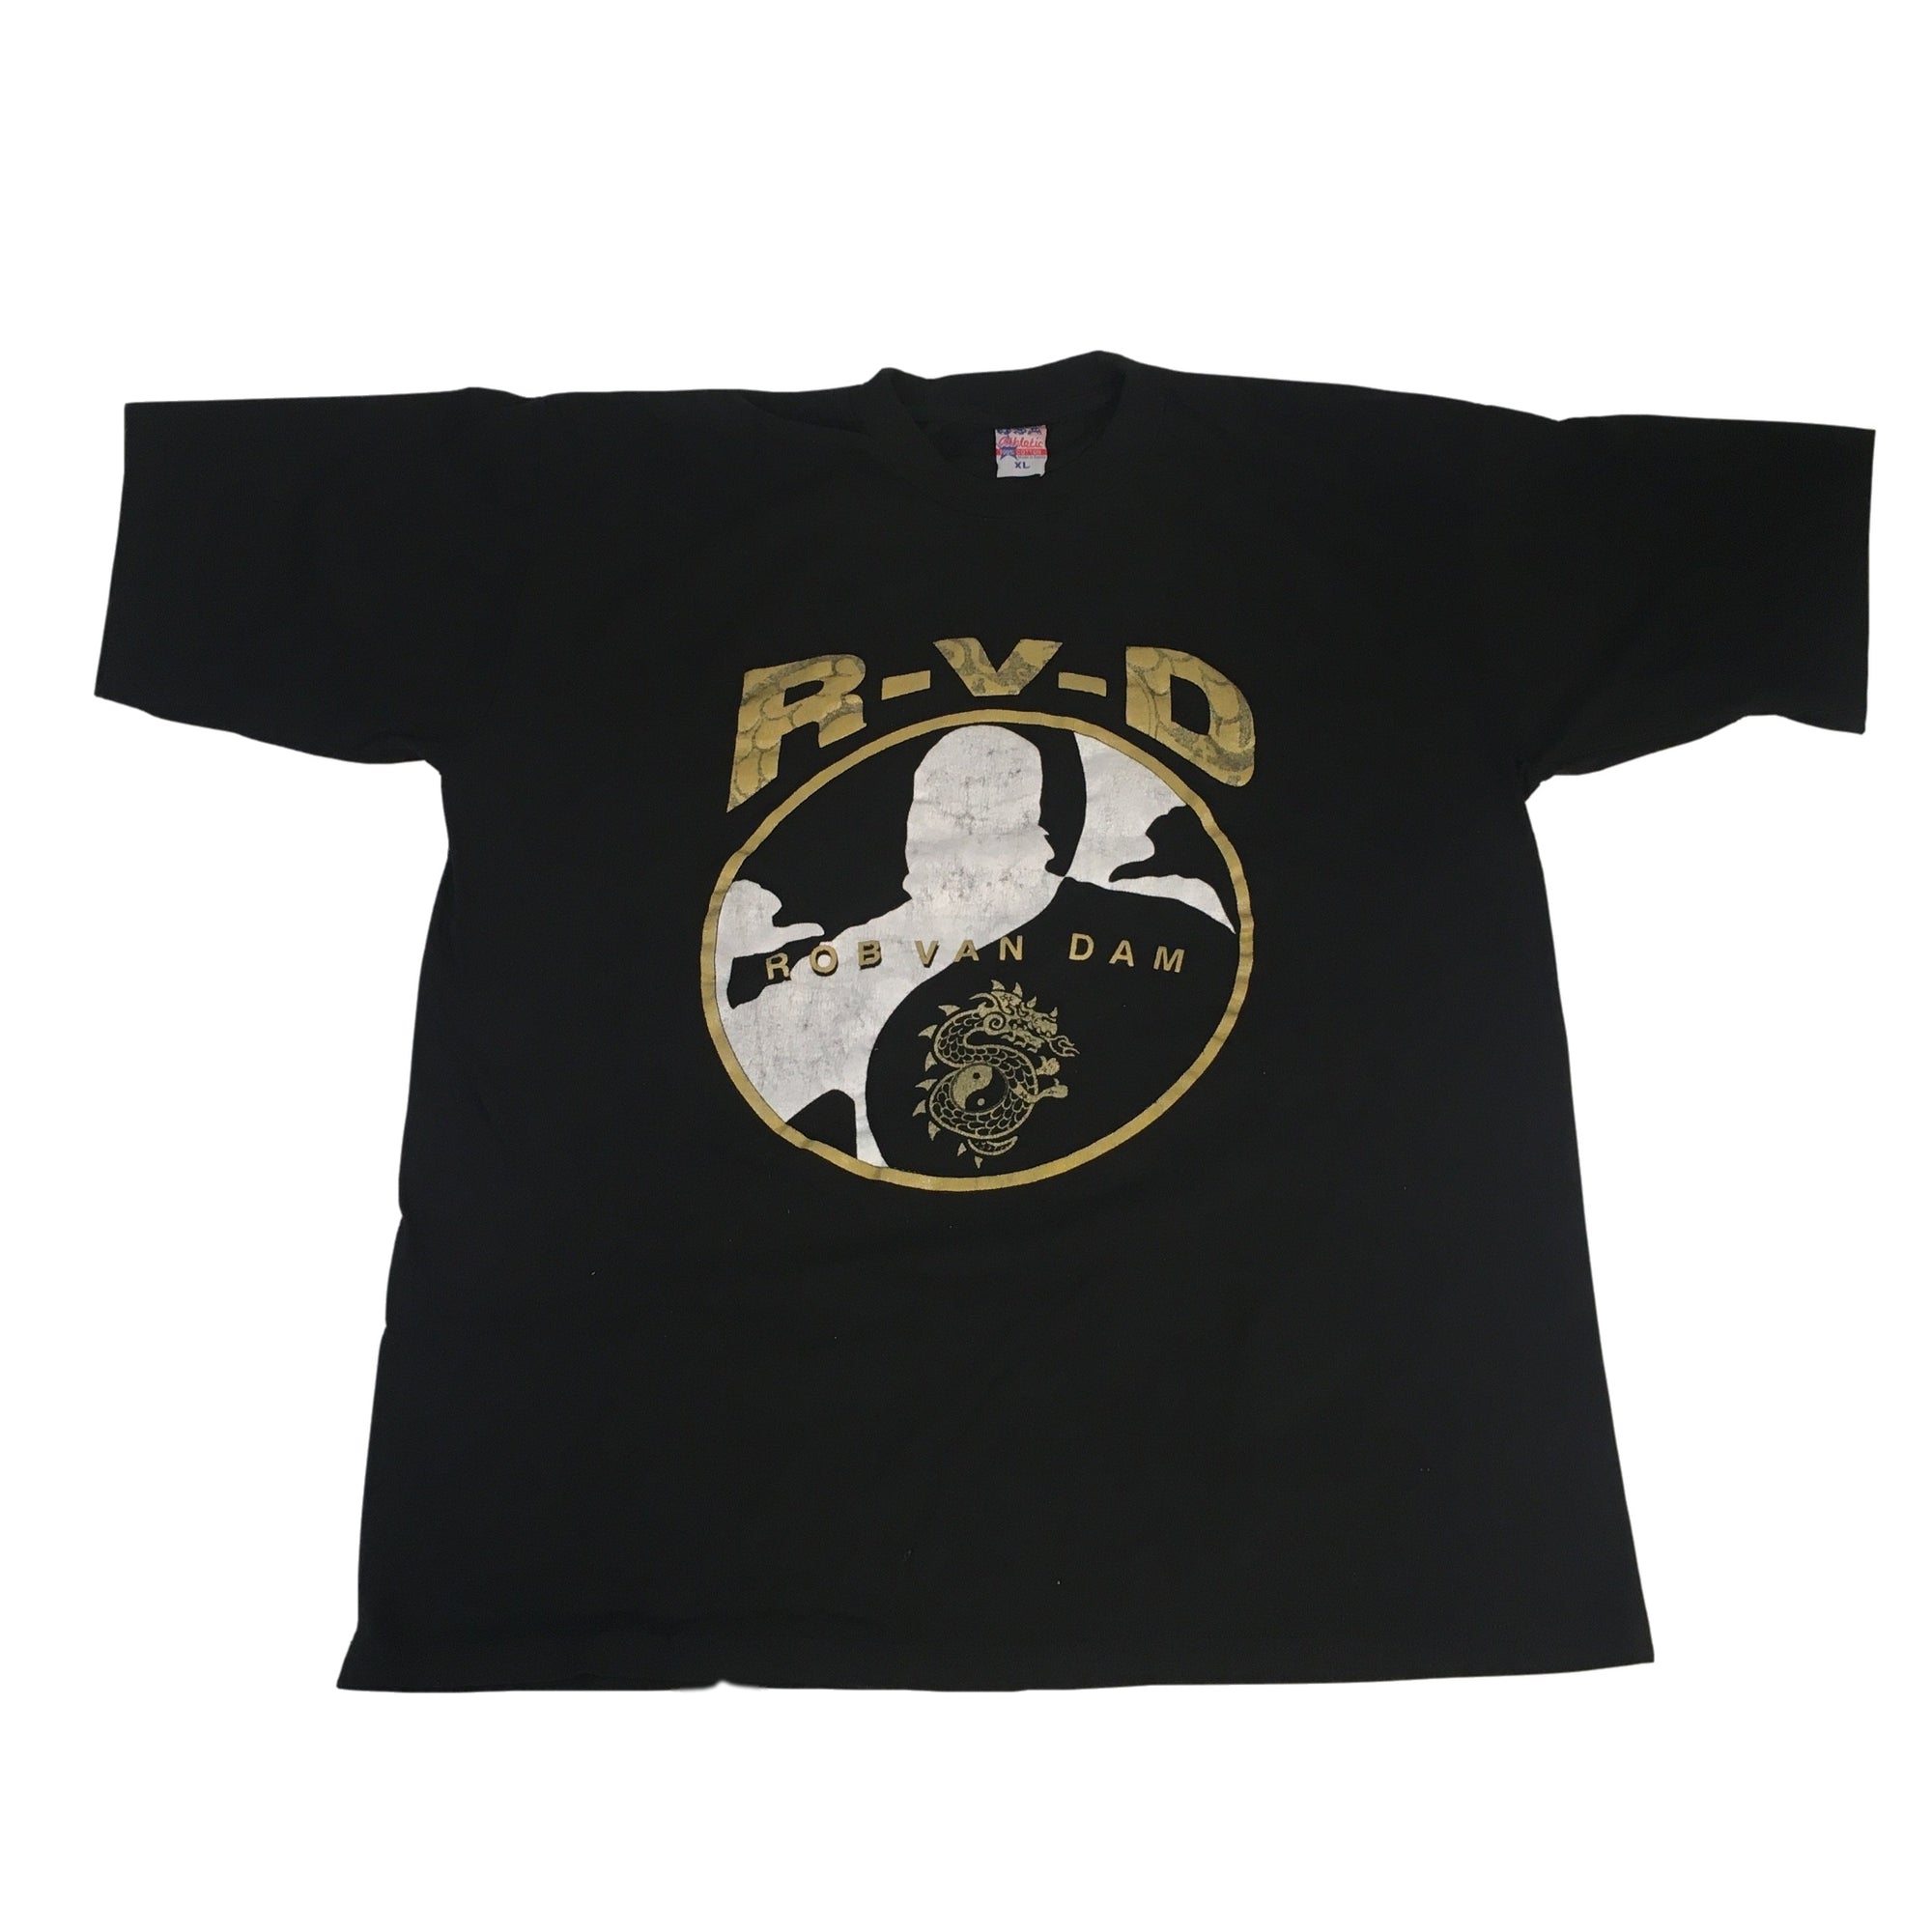 Vintage Rob Van Dam "RVD" T-Shirt - jointcustodydc